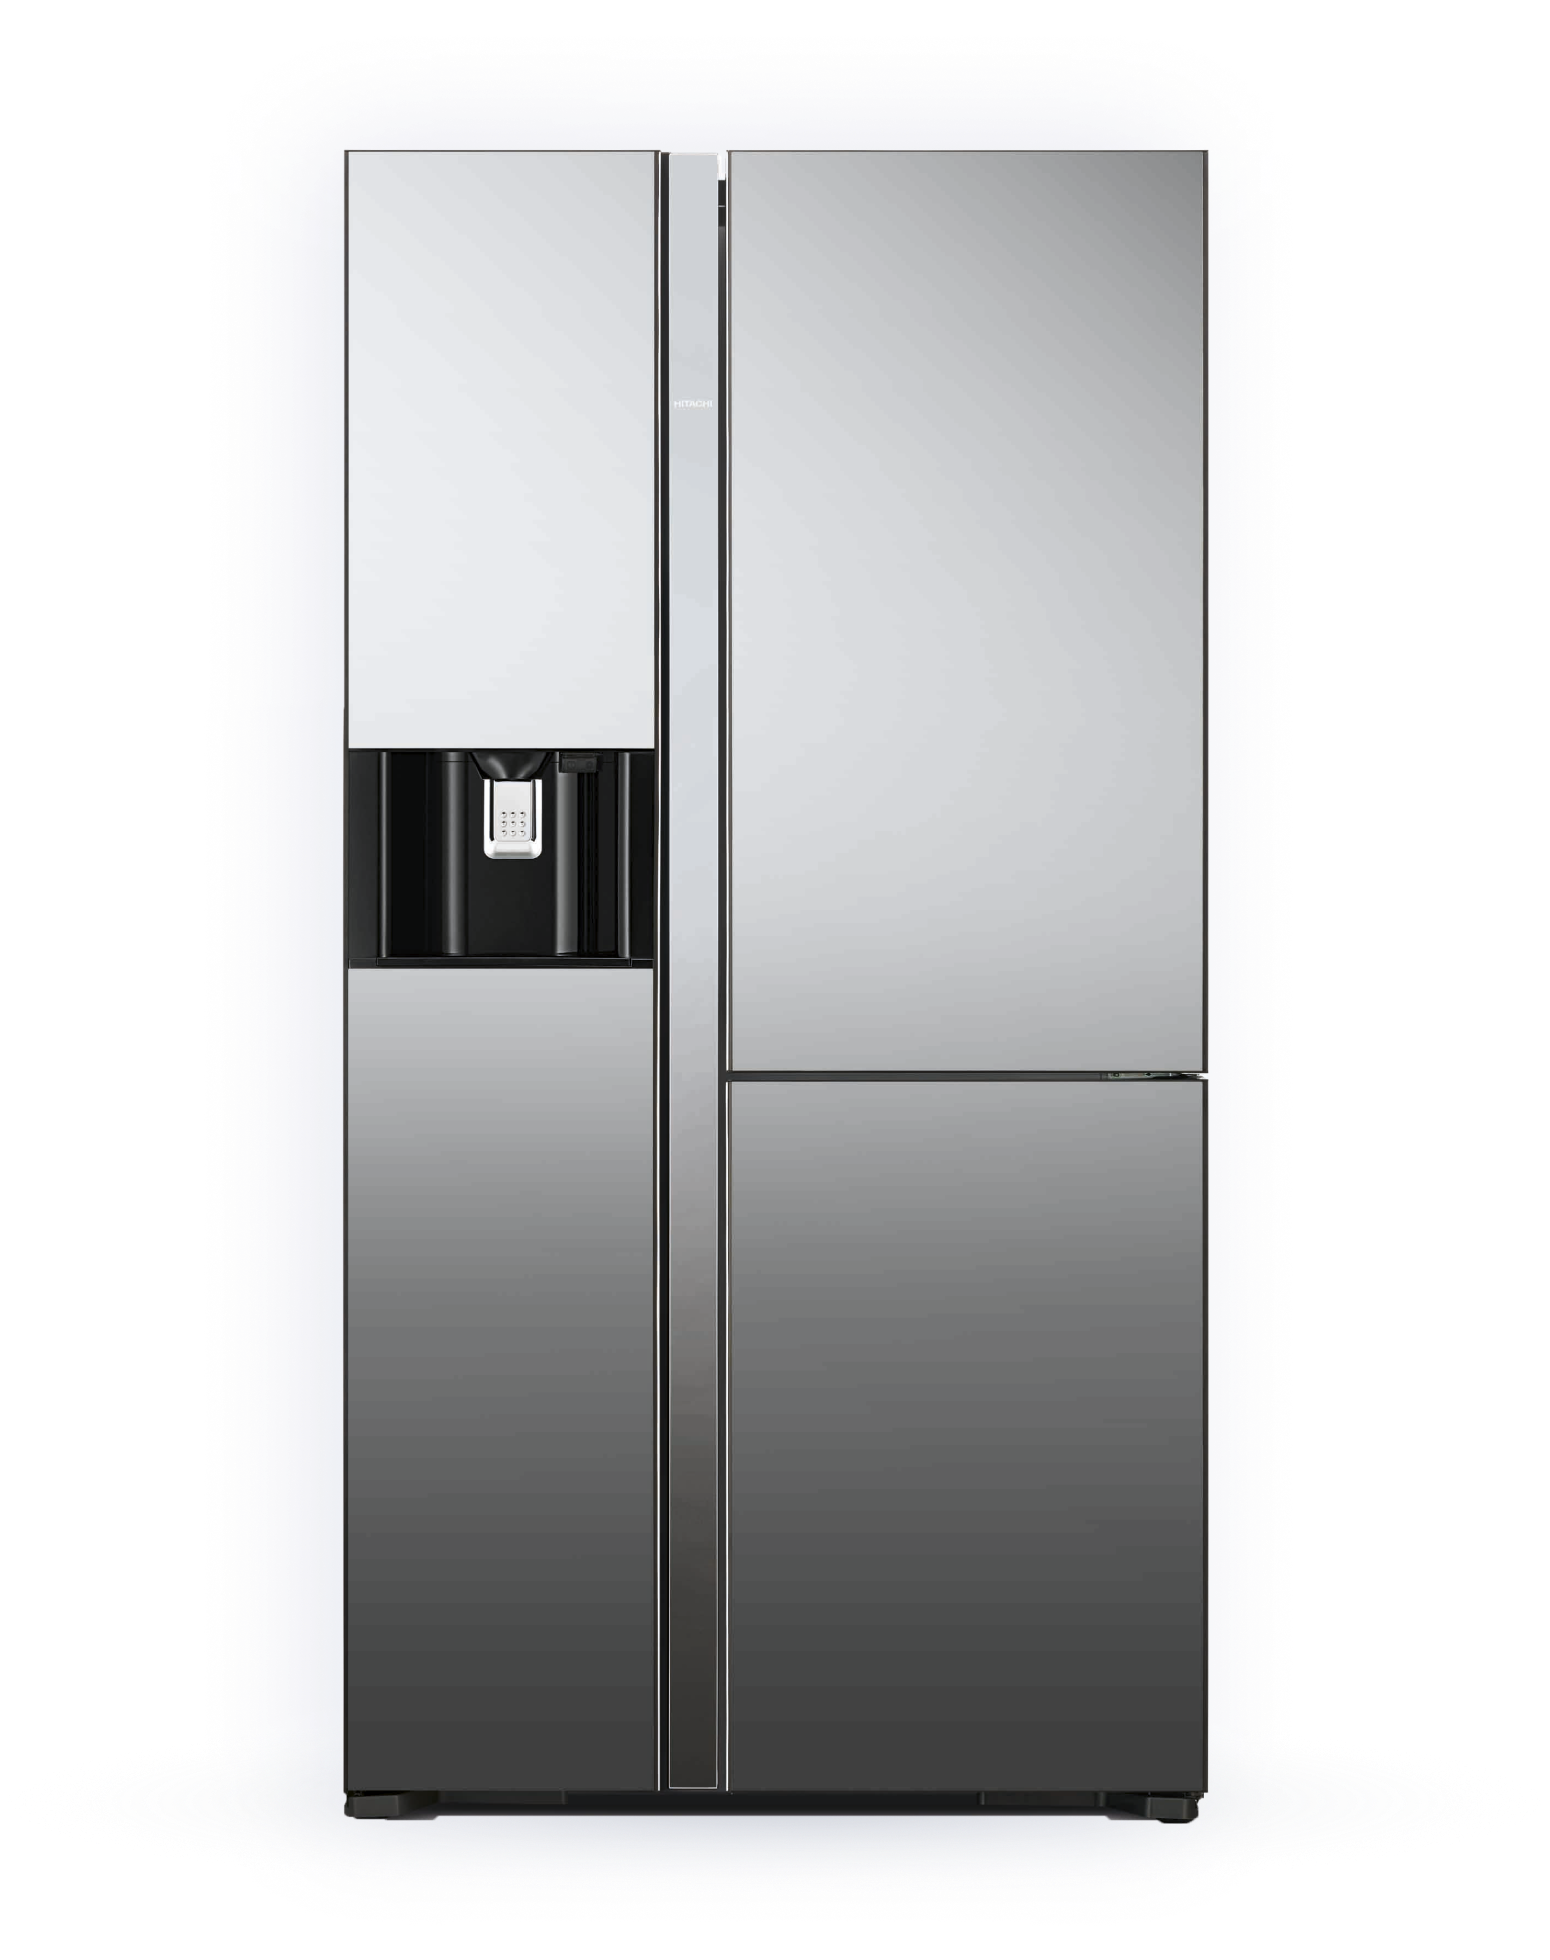 Hitachi холодильник